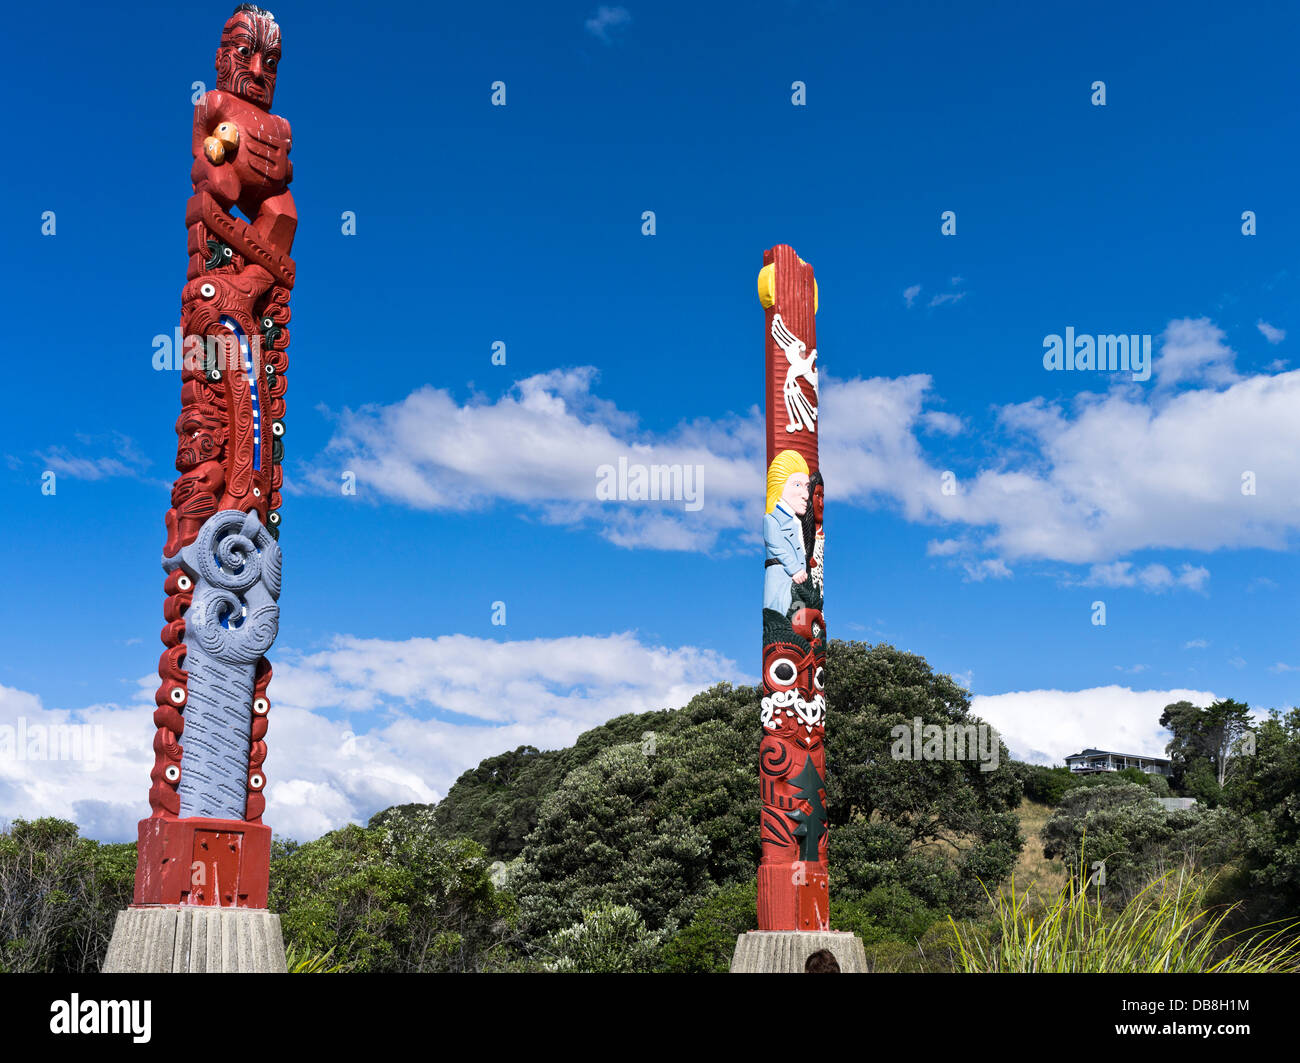 dh Waiotahi Beach Holzpfähle BAY OF PLENTY NEUSEELAND NZ Maori geschnitzte Kunst in der Nähe von Opotiki Schnitzerei Holzskulptur Kultur maoris Stockfoto